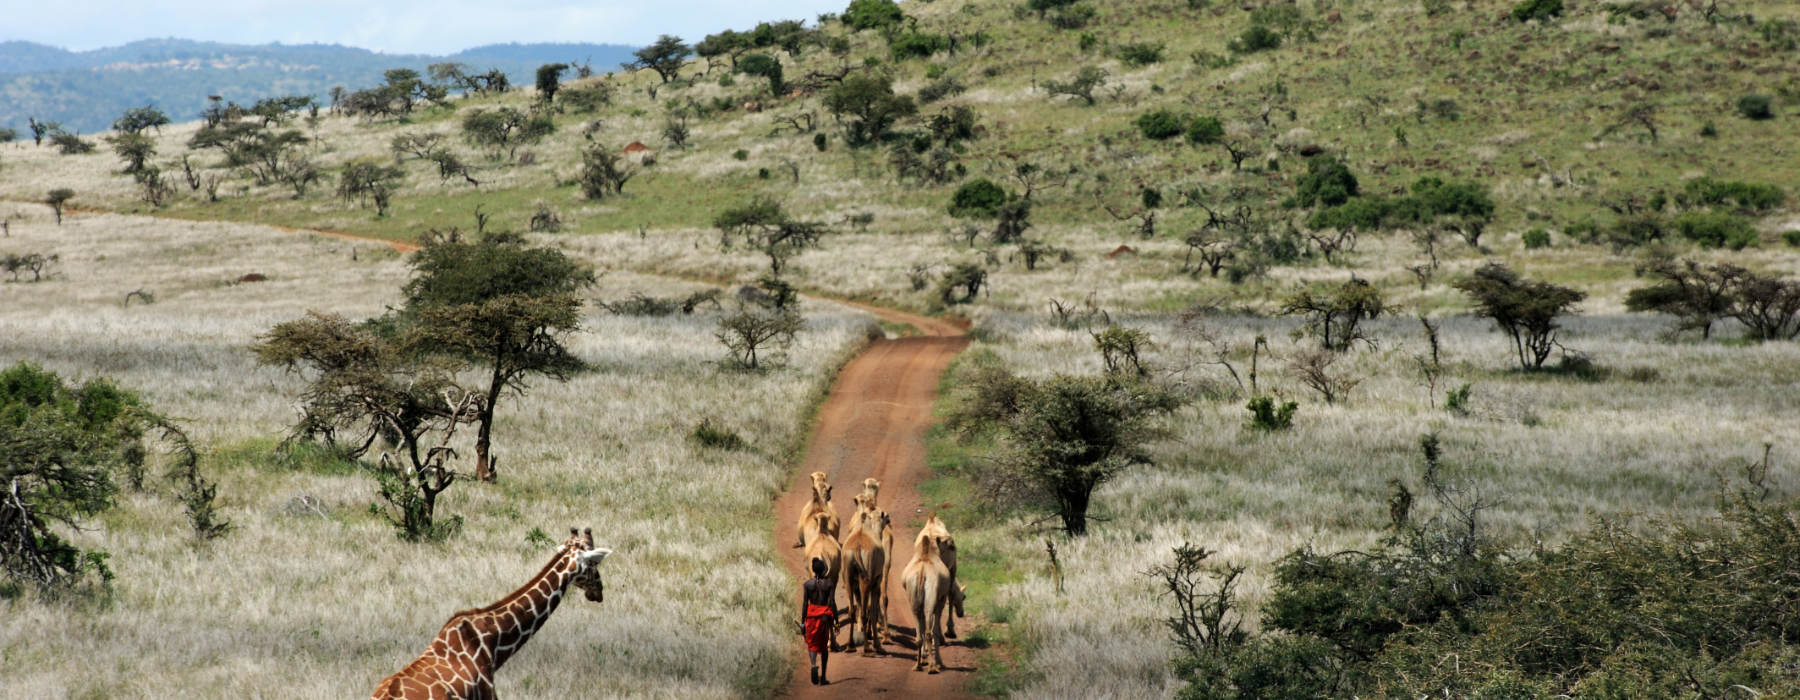  The Masai Mara Holidays